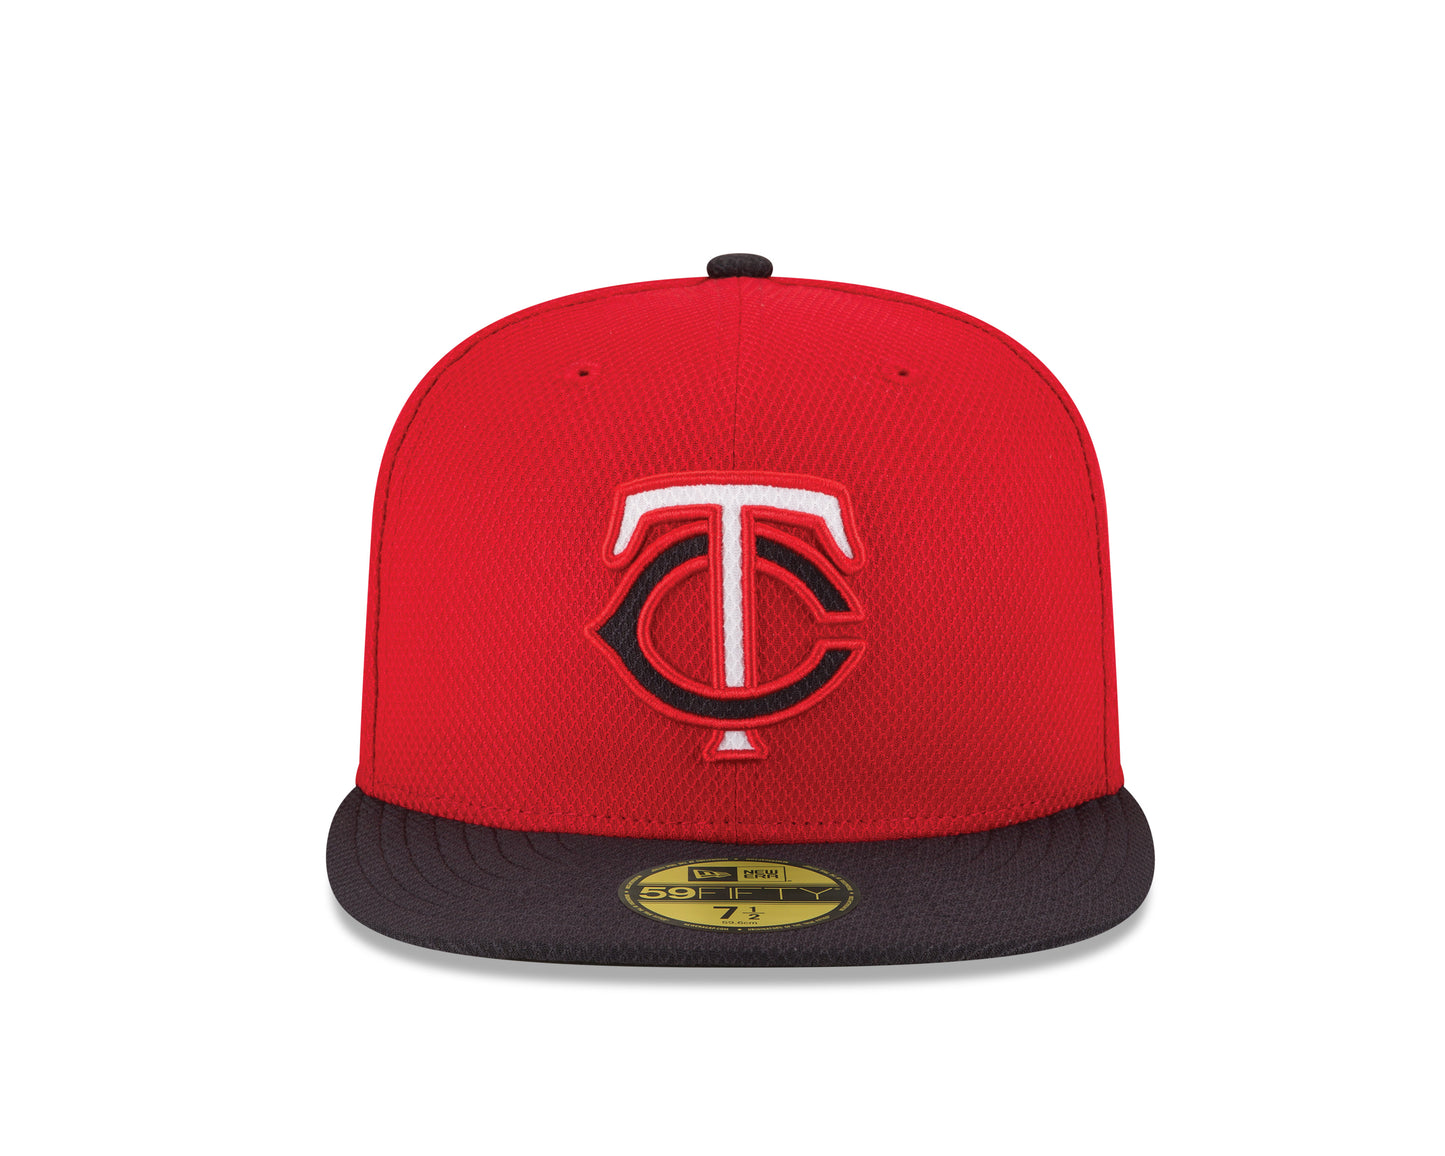 Minnesota Twins New Era Diamond Era 59FIFTY Fitted Hat - Red /Black